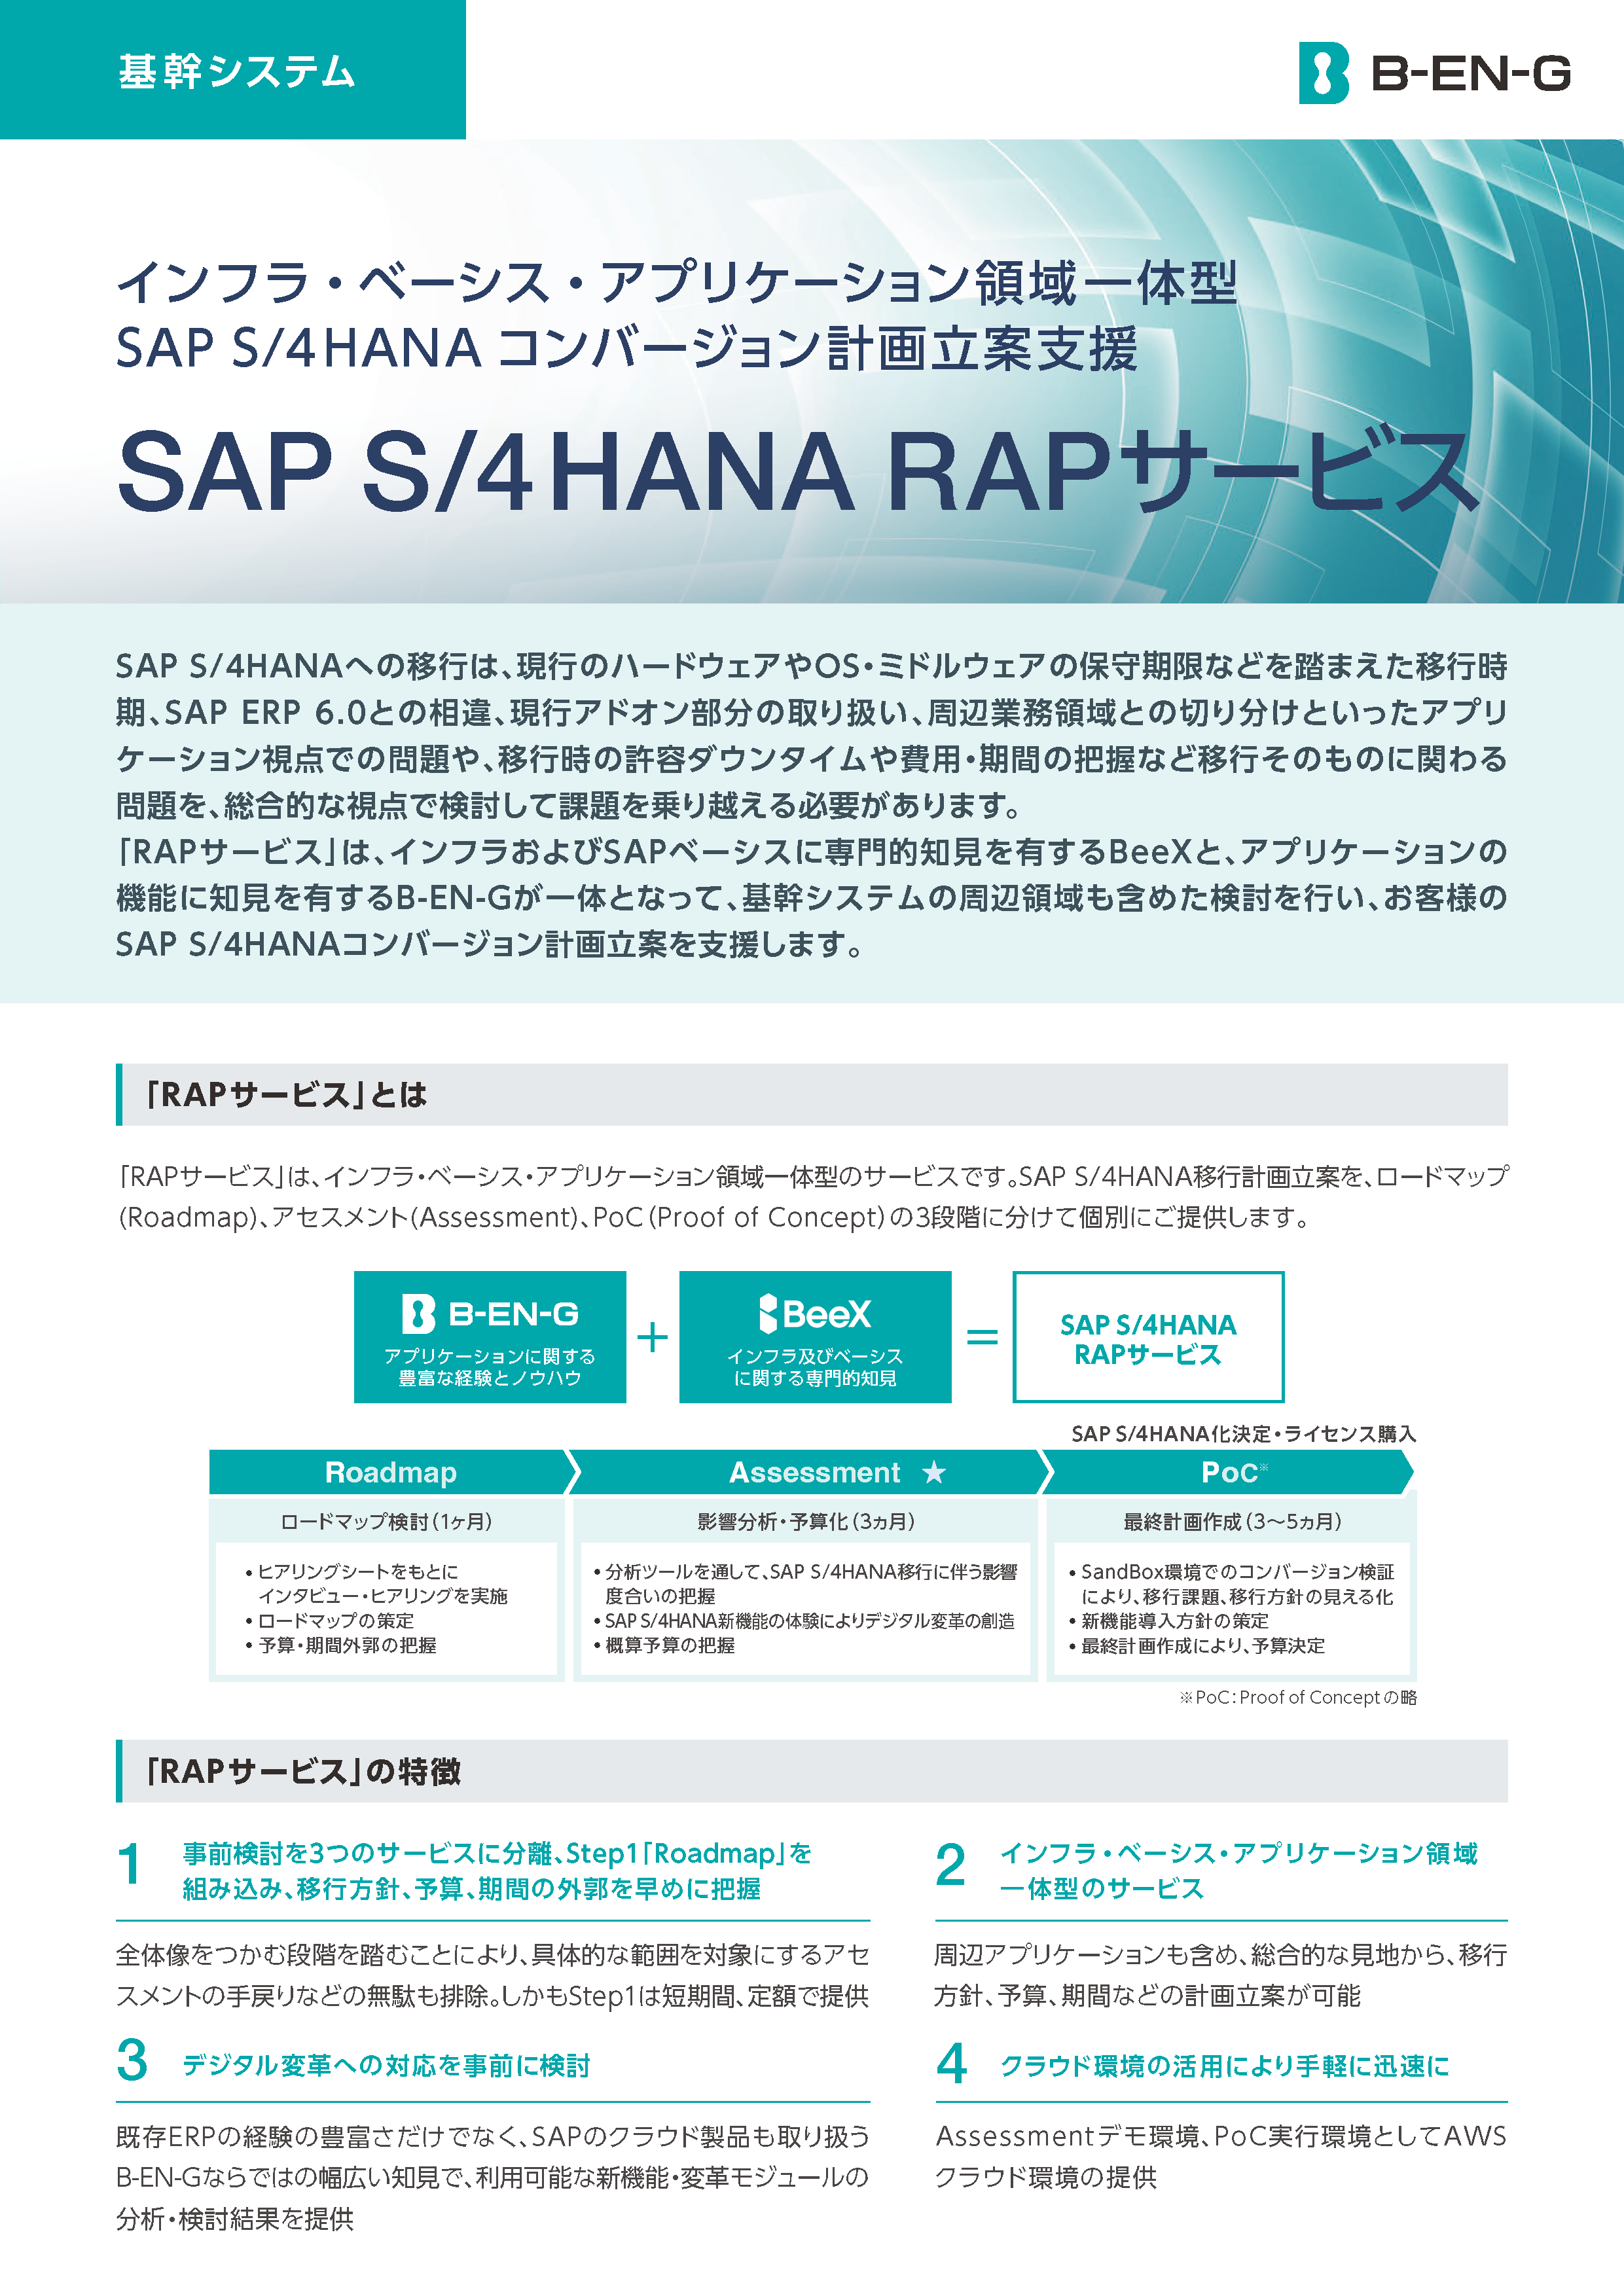 SAP S/4HANA RAPサービス